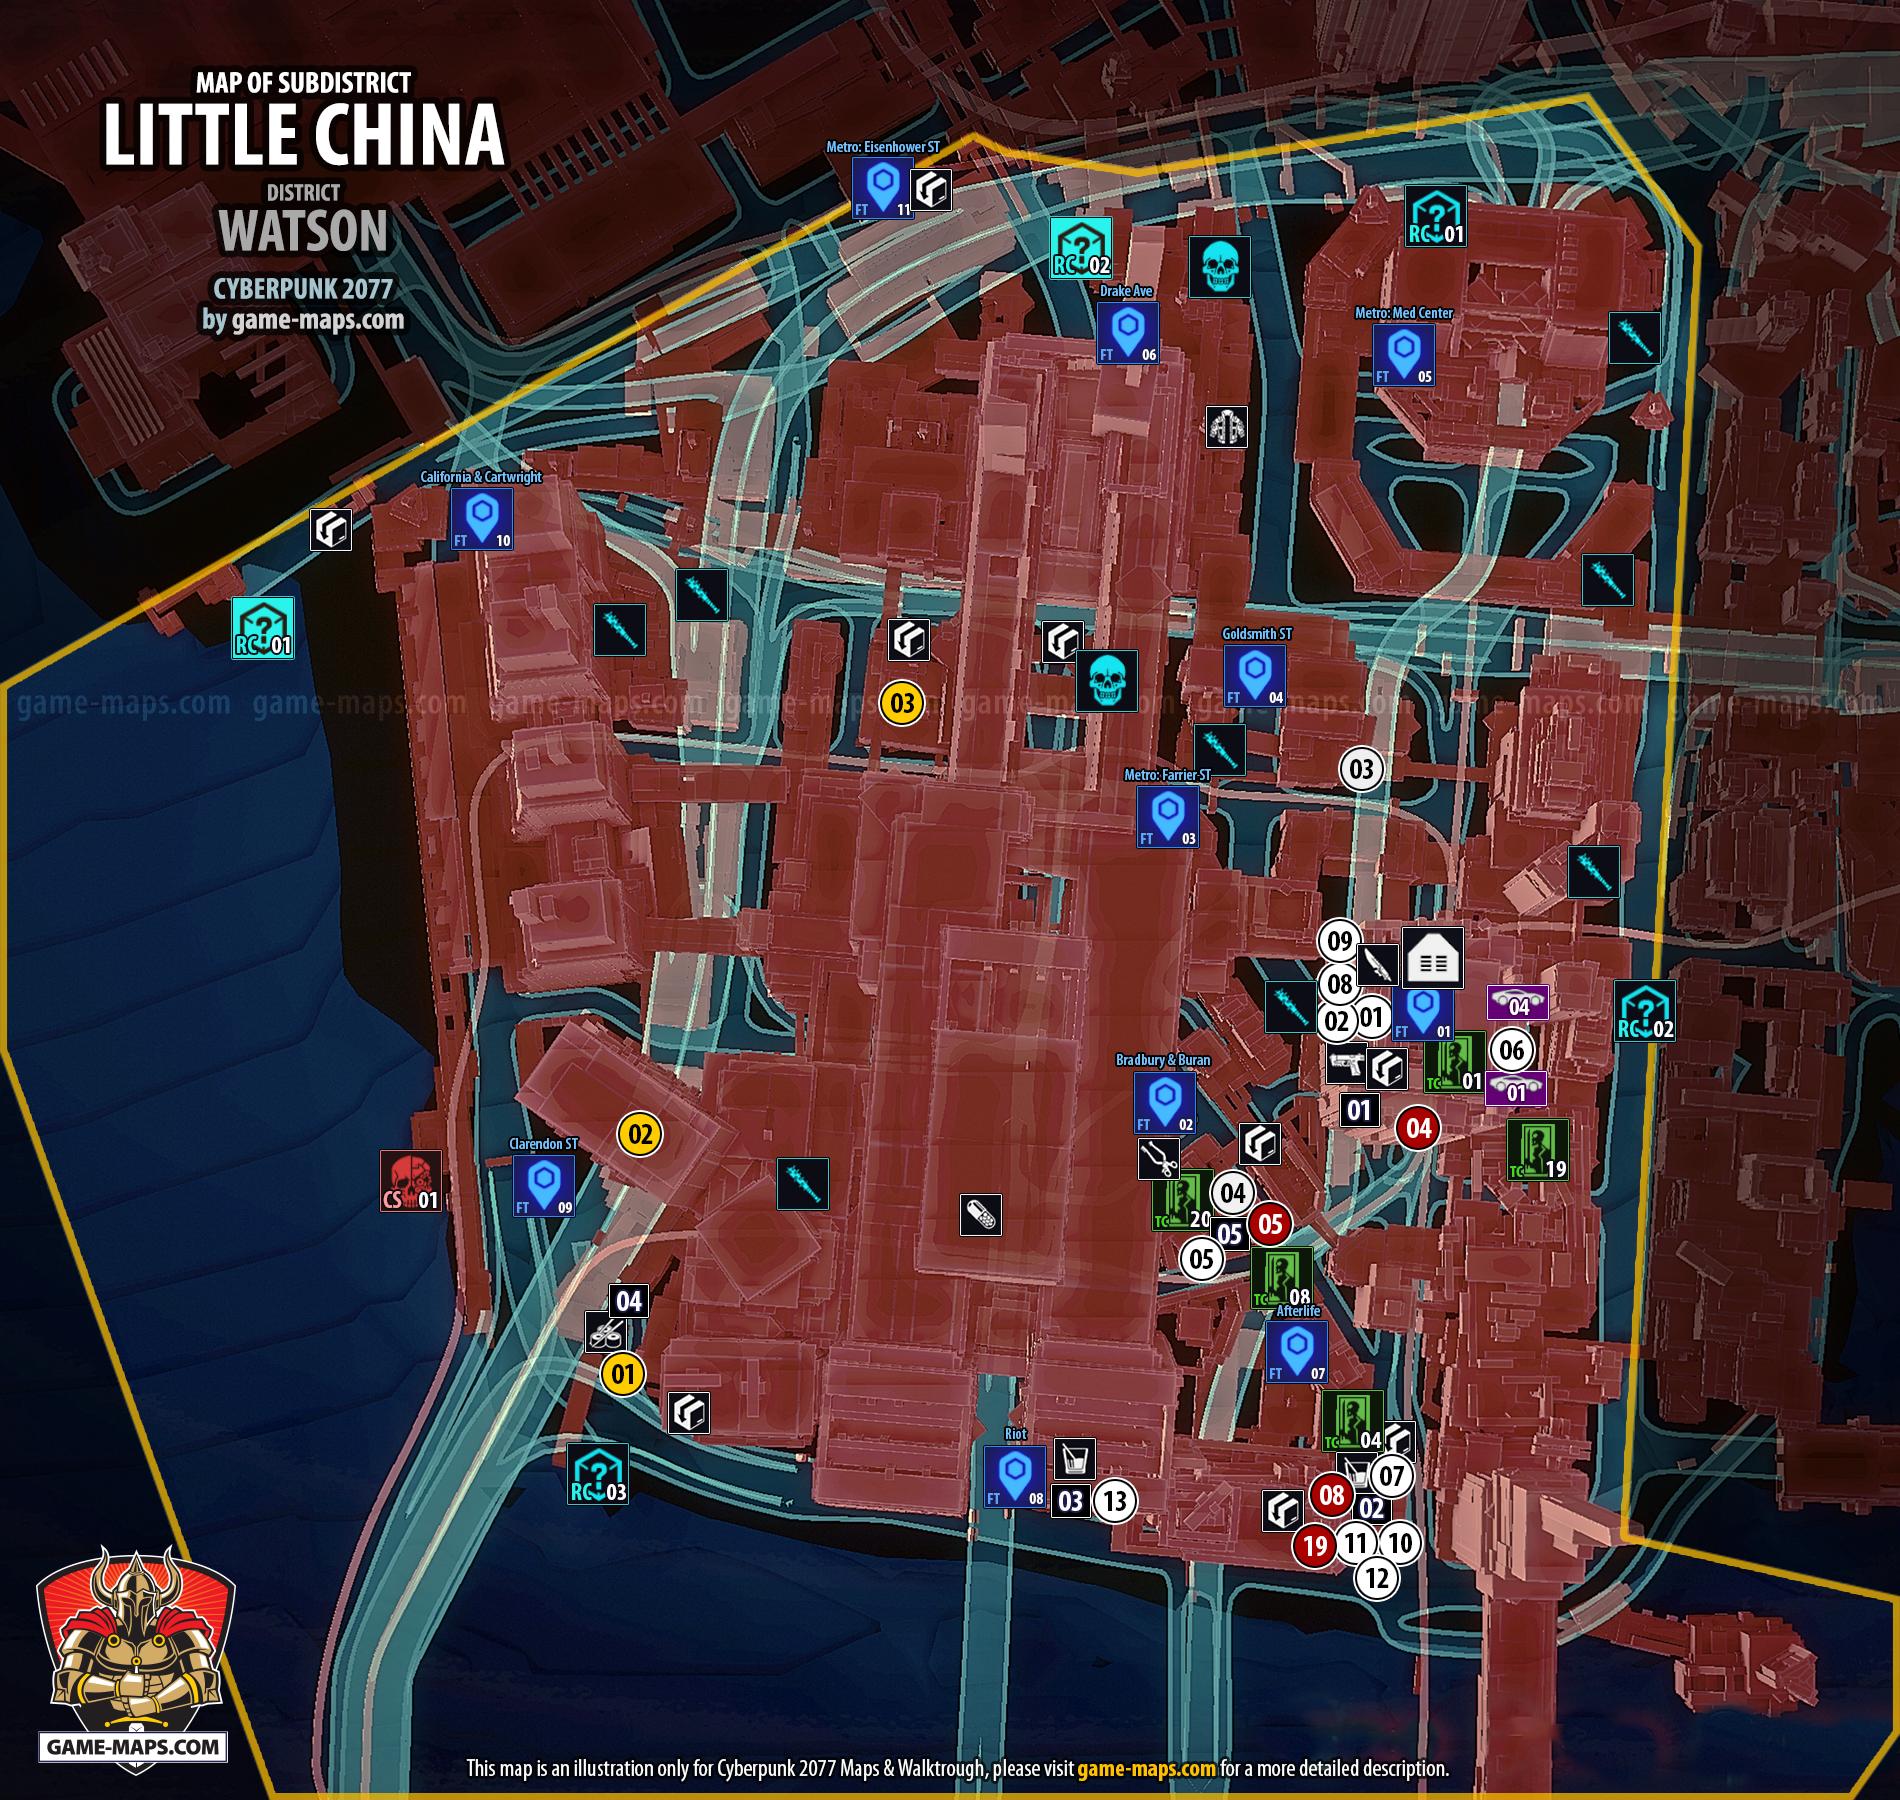 Little China Map in Watson District - Cyberpunk 2077